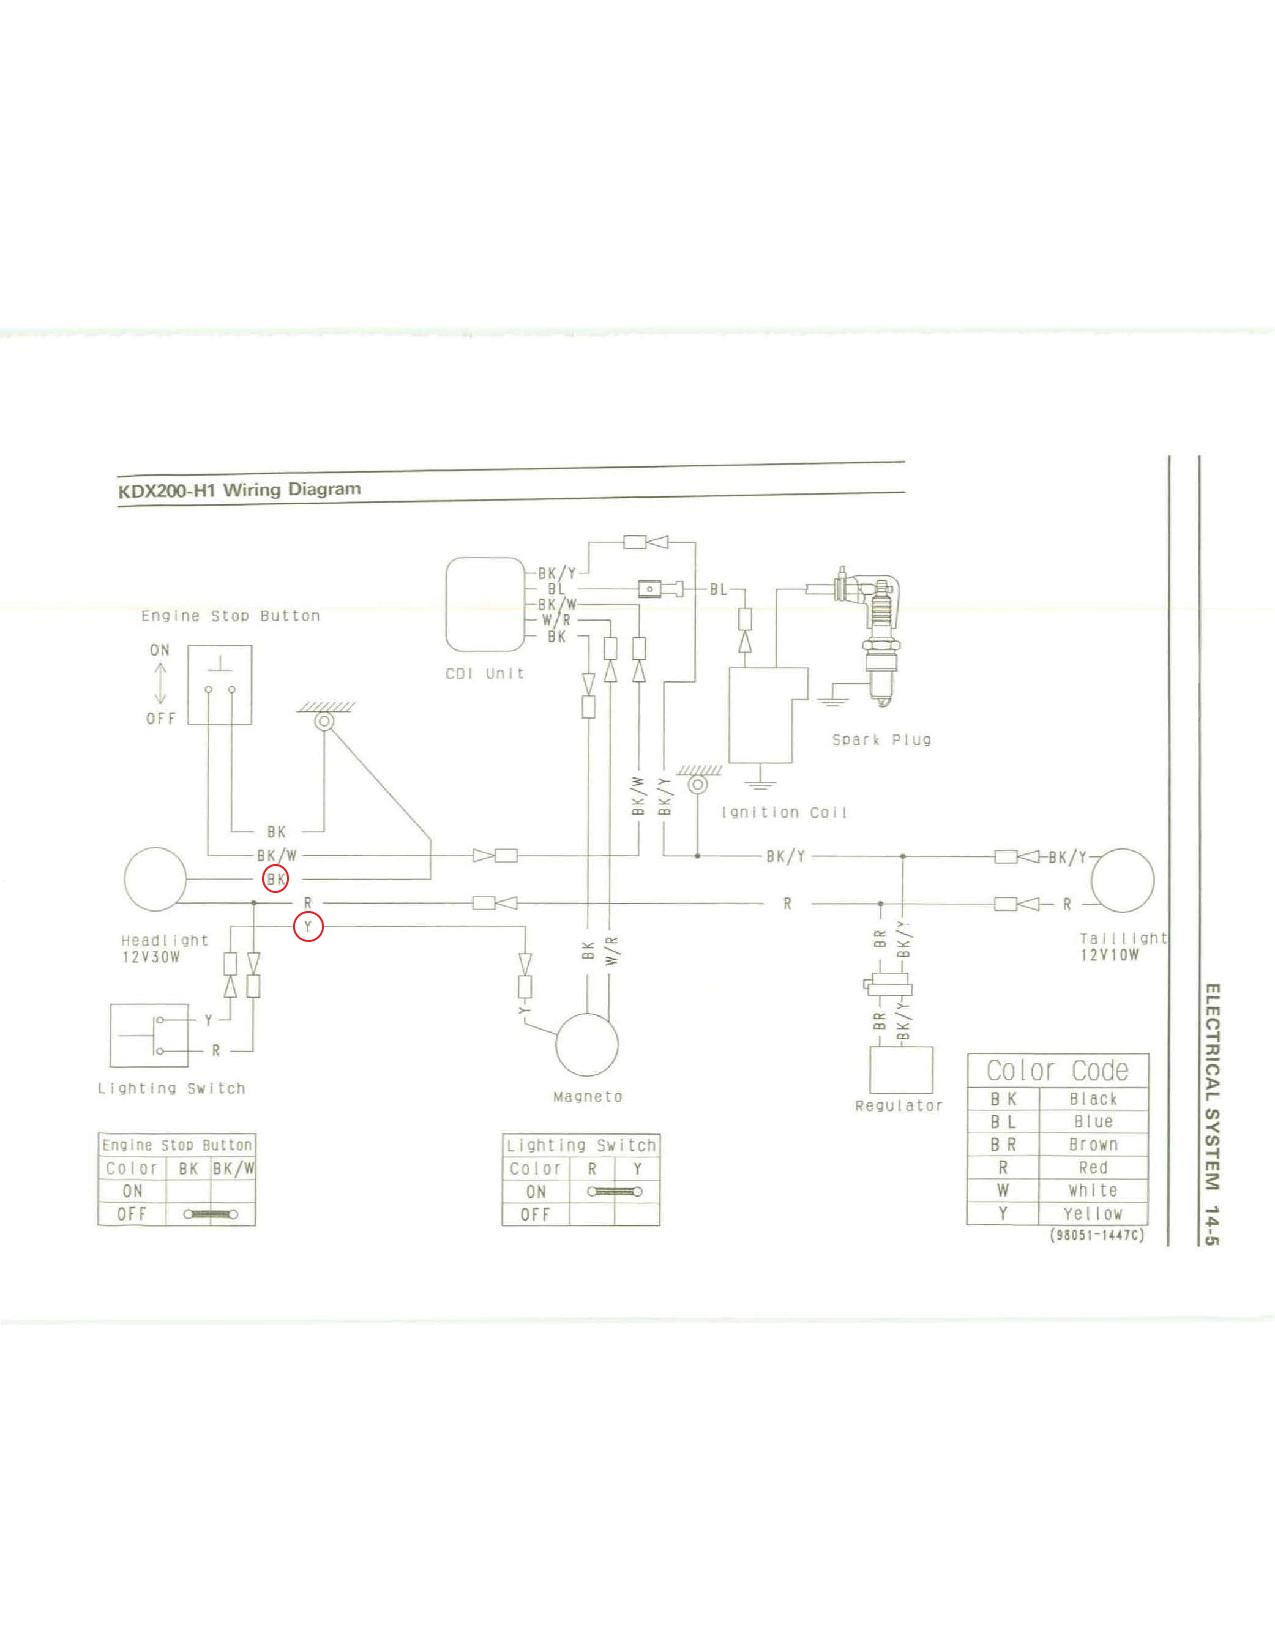 Trail tech wiring diagram.jpg